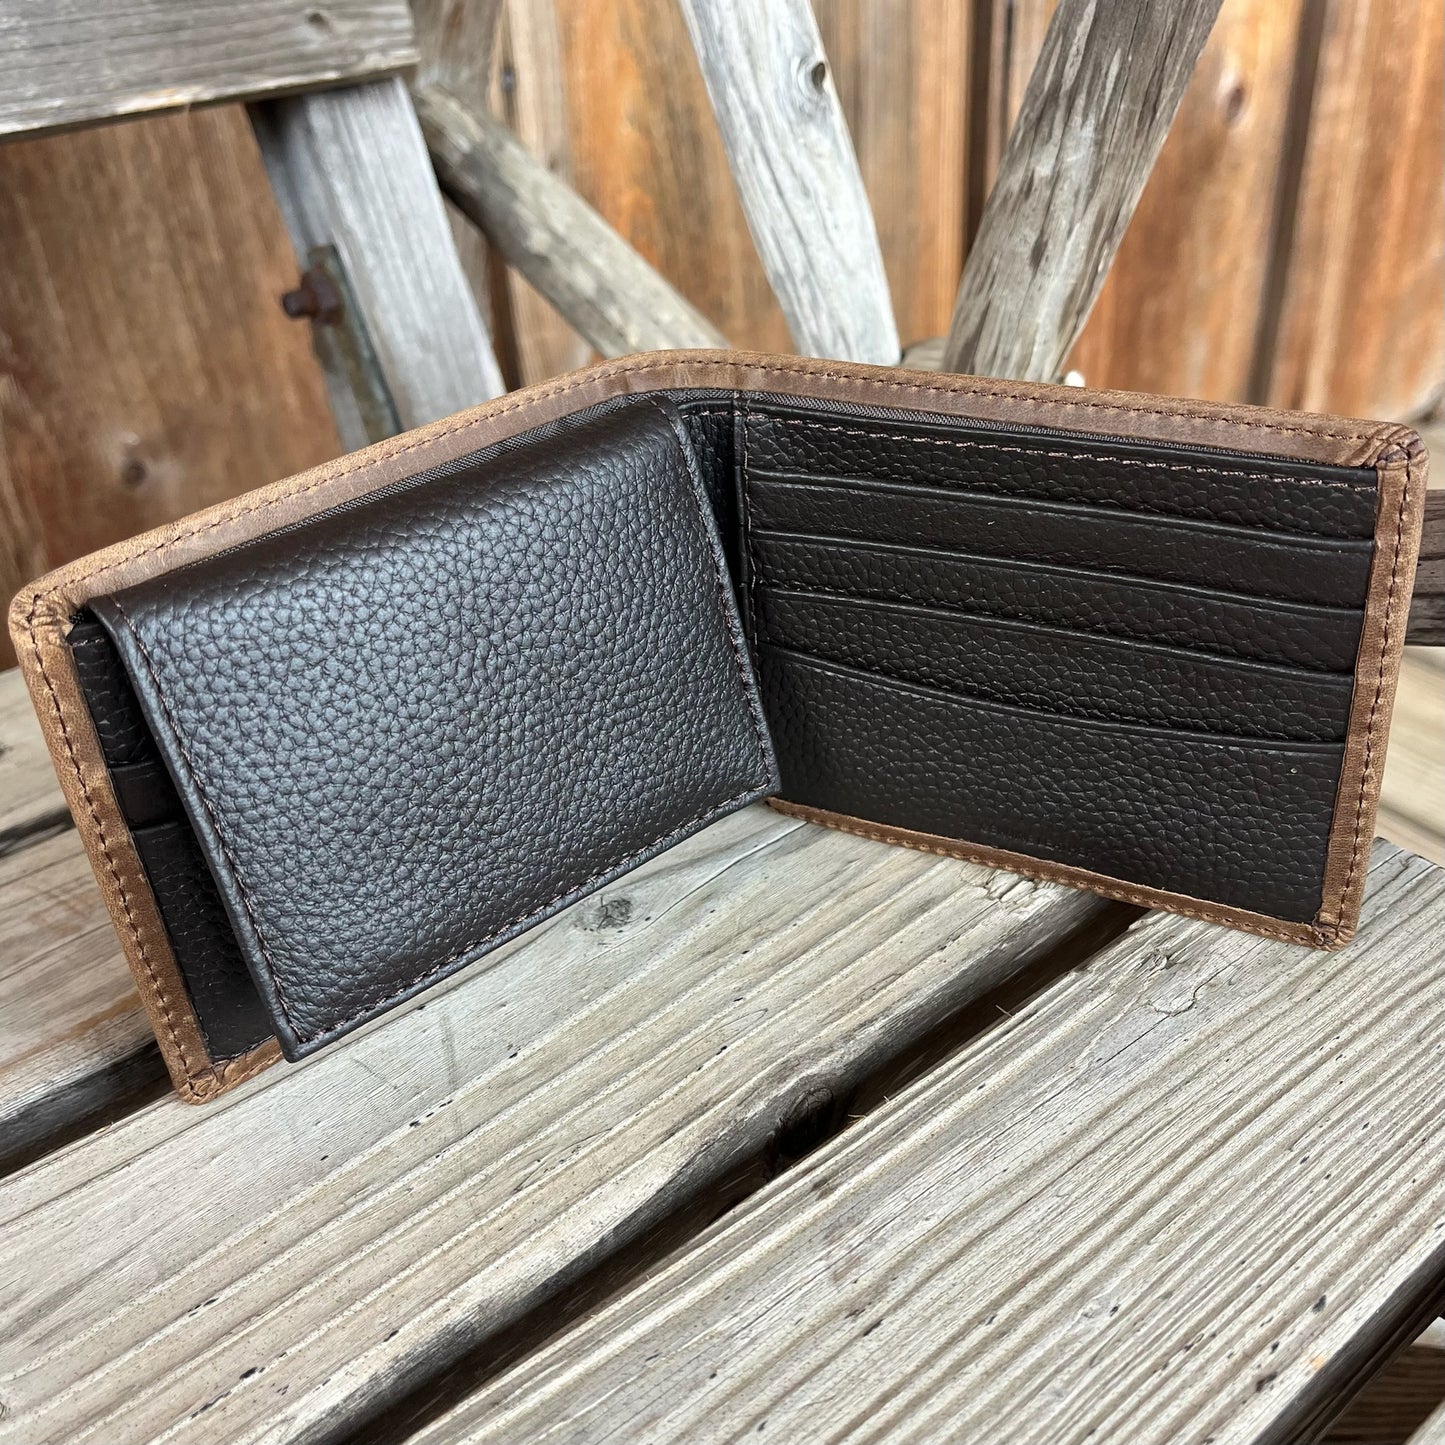 Brown Bi-Fold Wallet